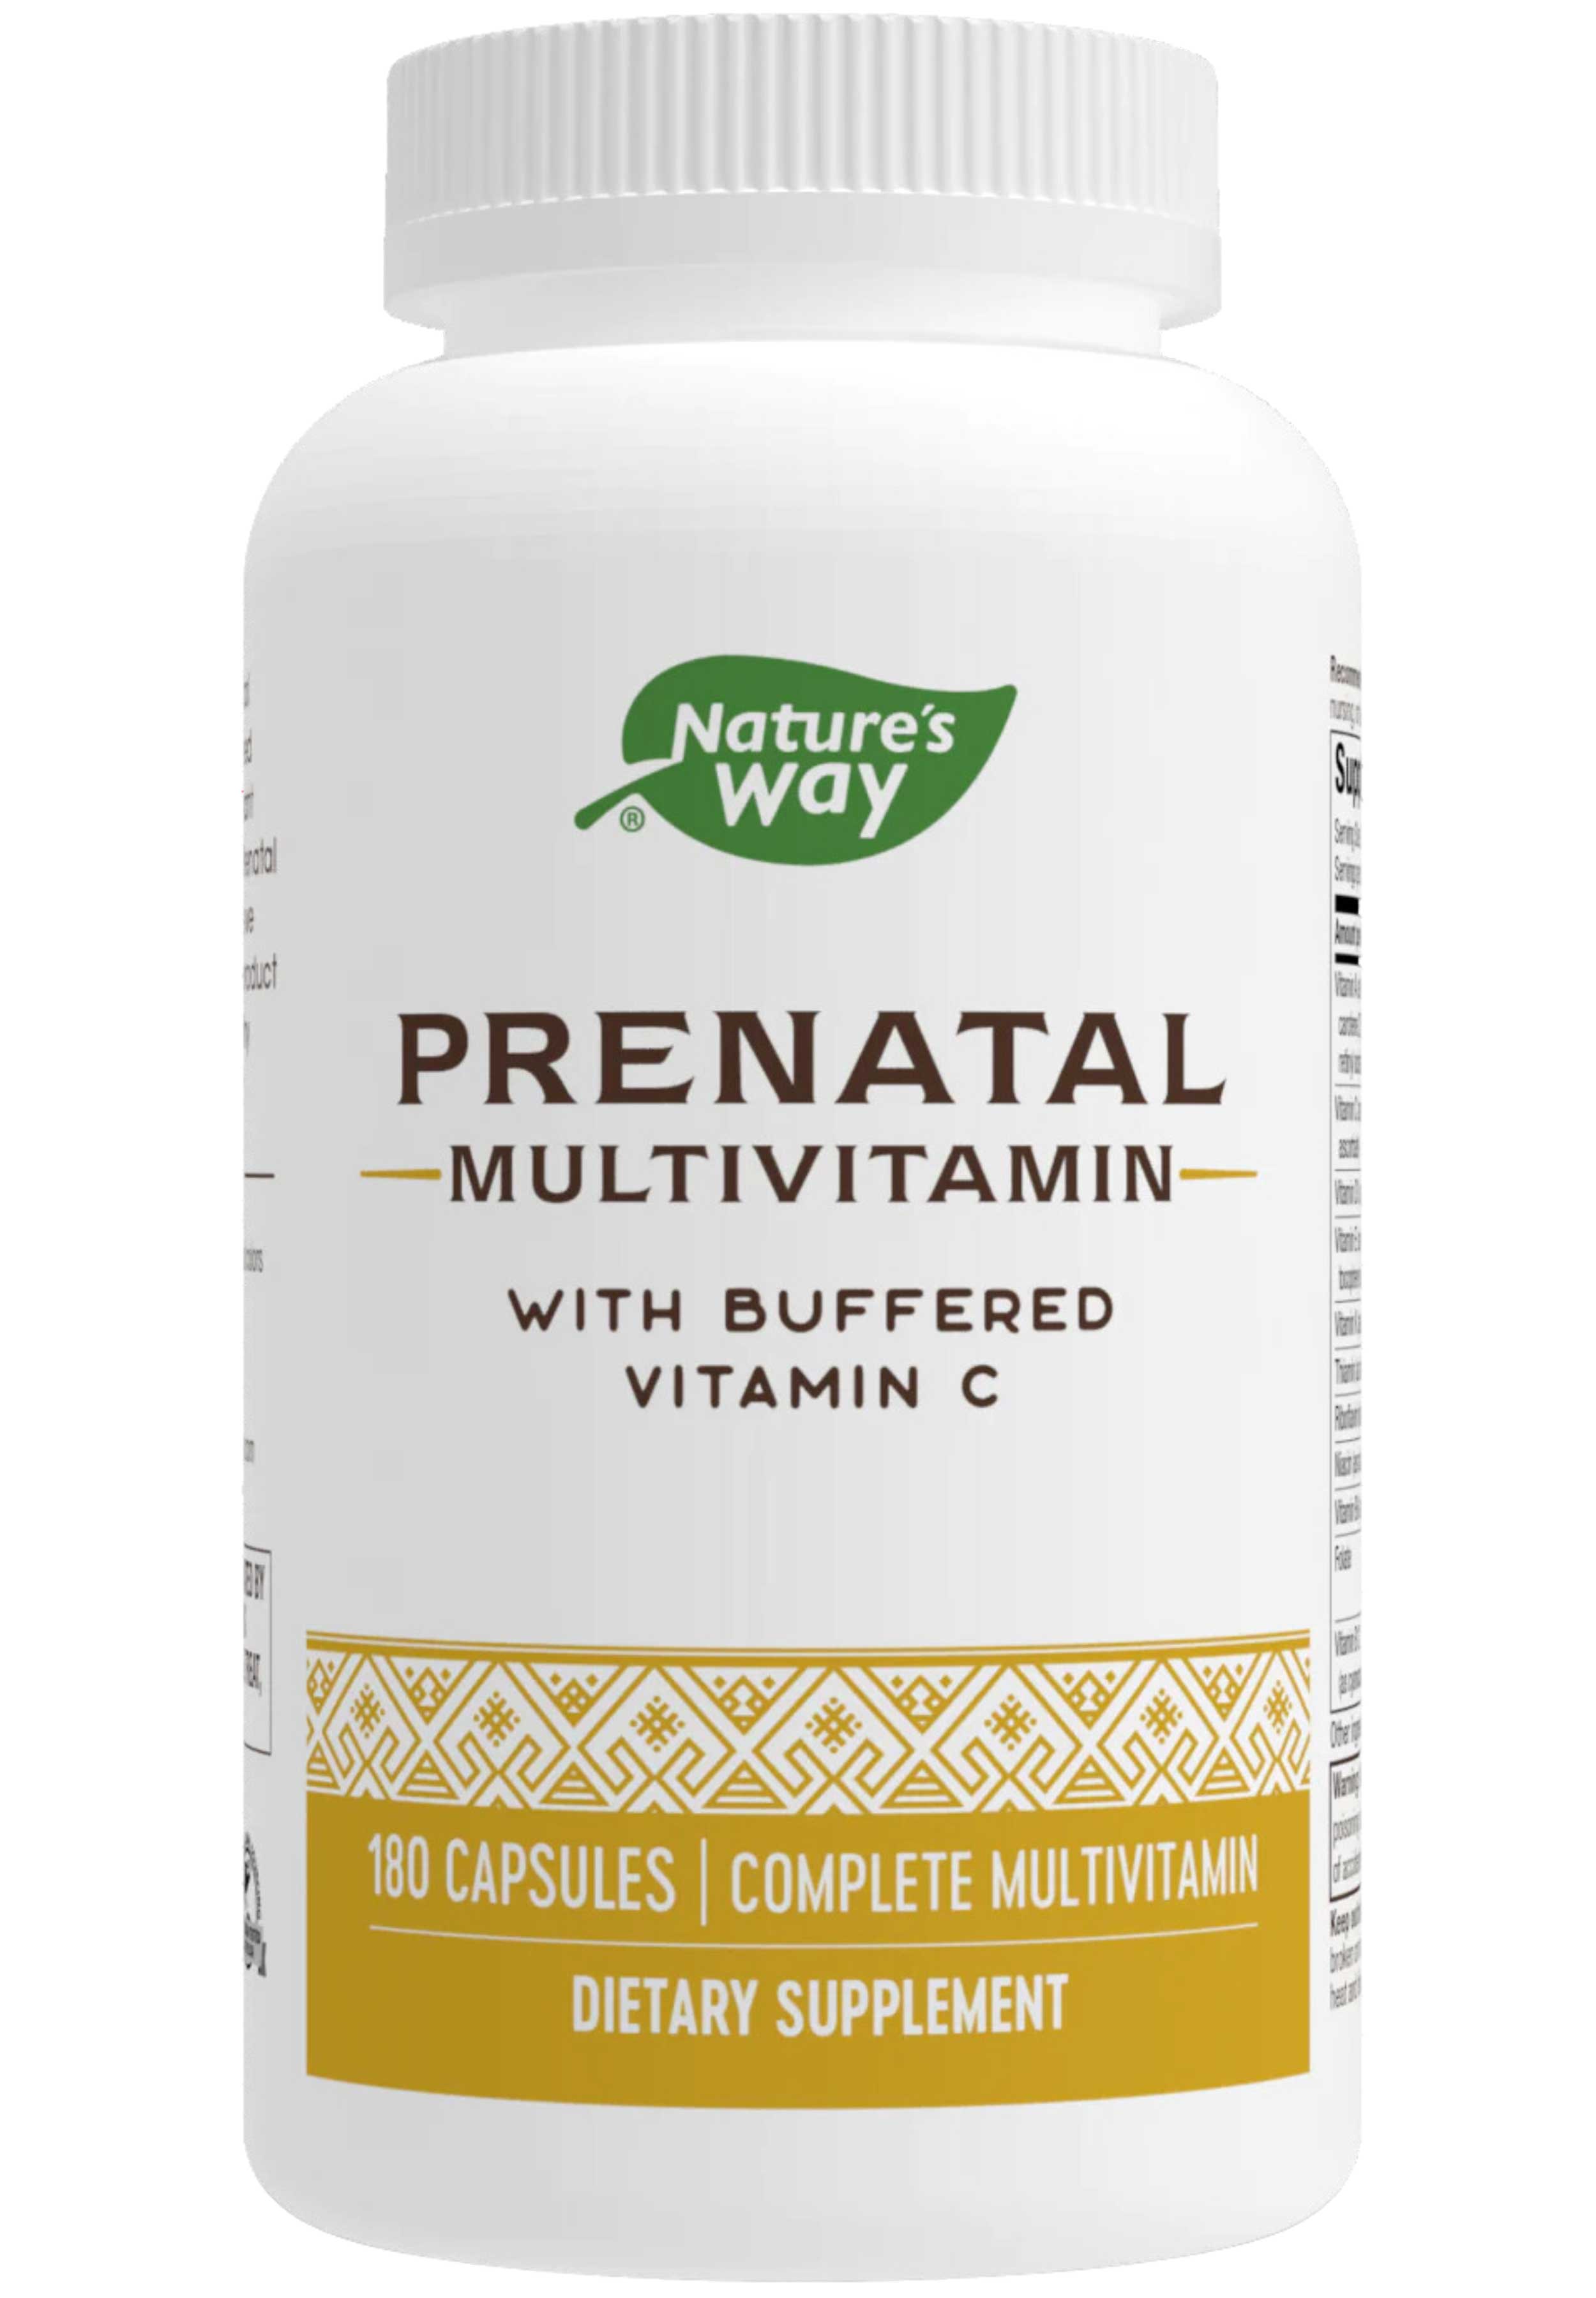 Nature's Way Prenatal Multivitamin with Buffered Vitamin C